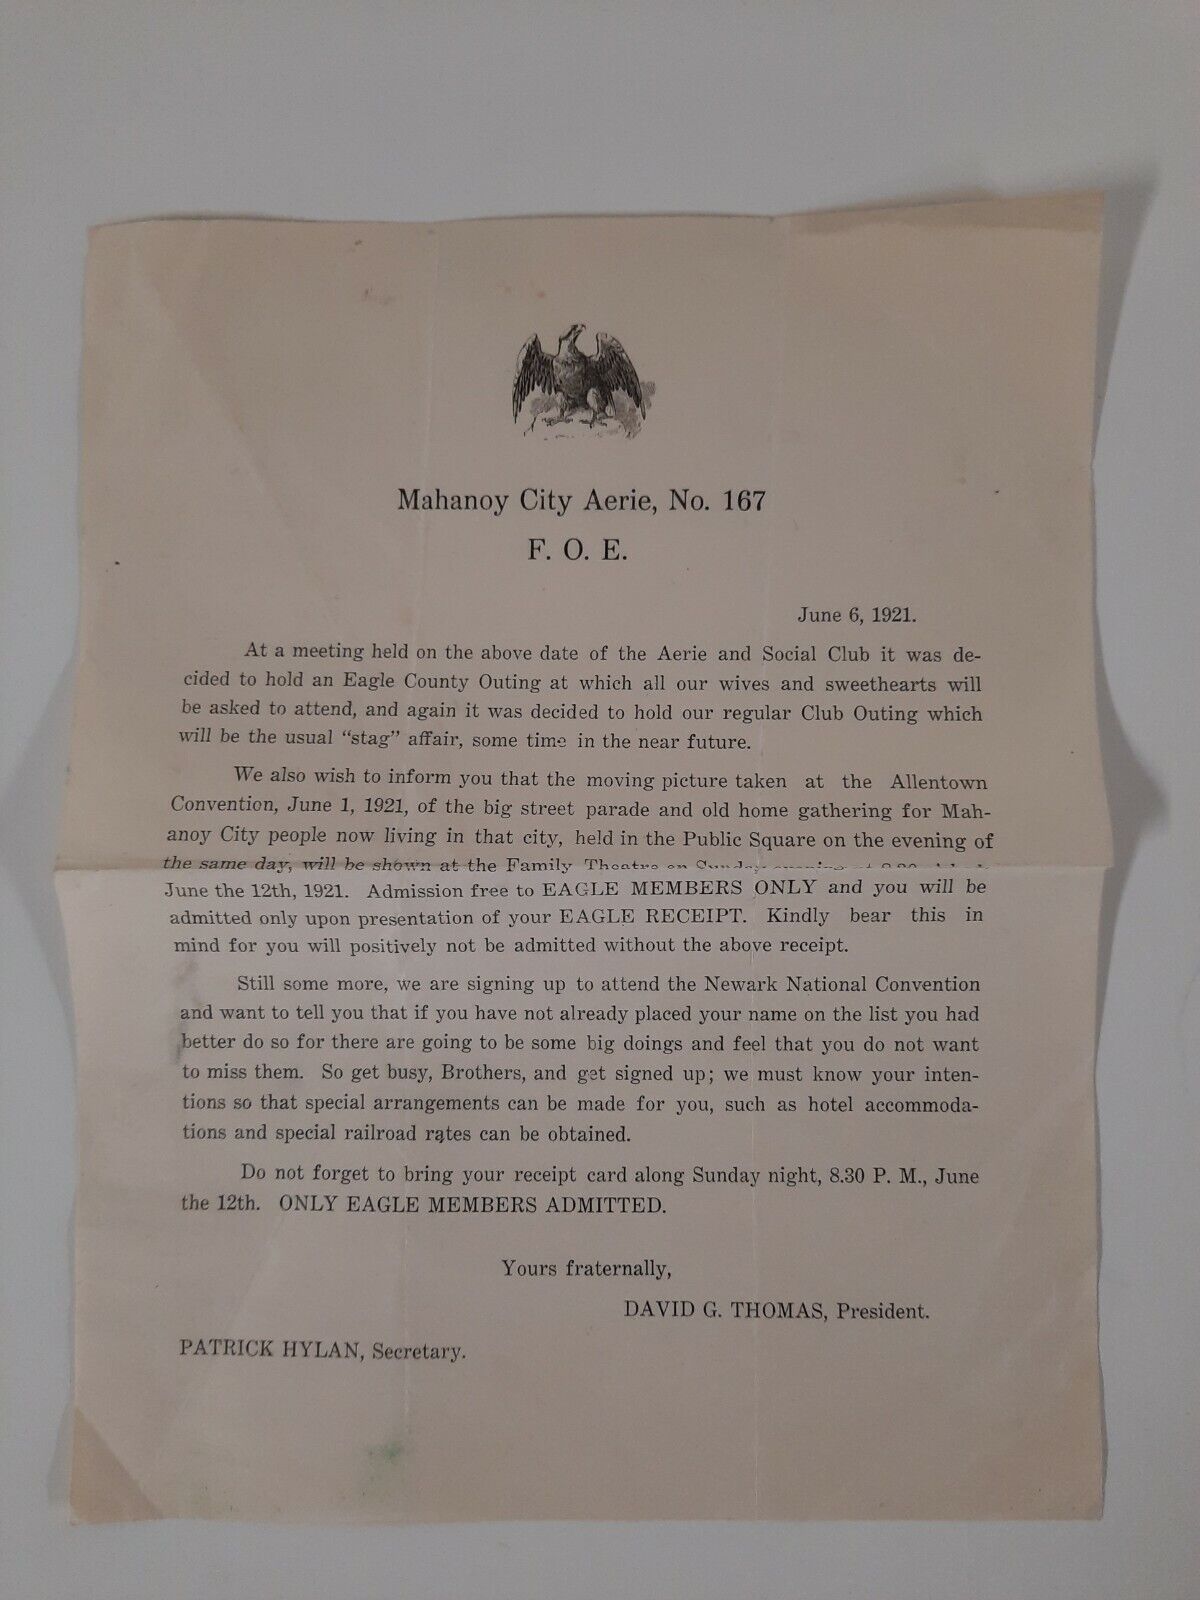 FOE 1927 letter MAHANOY CITY AERIE No 167